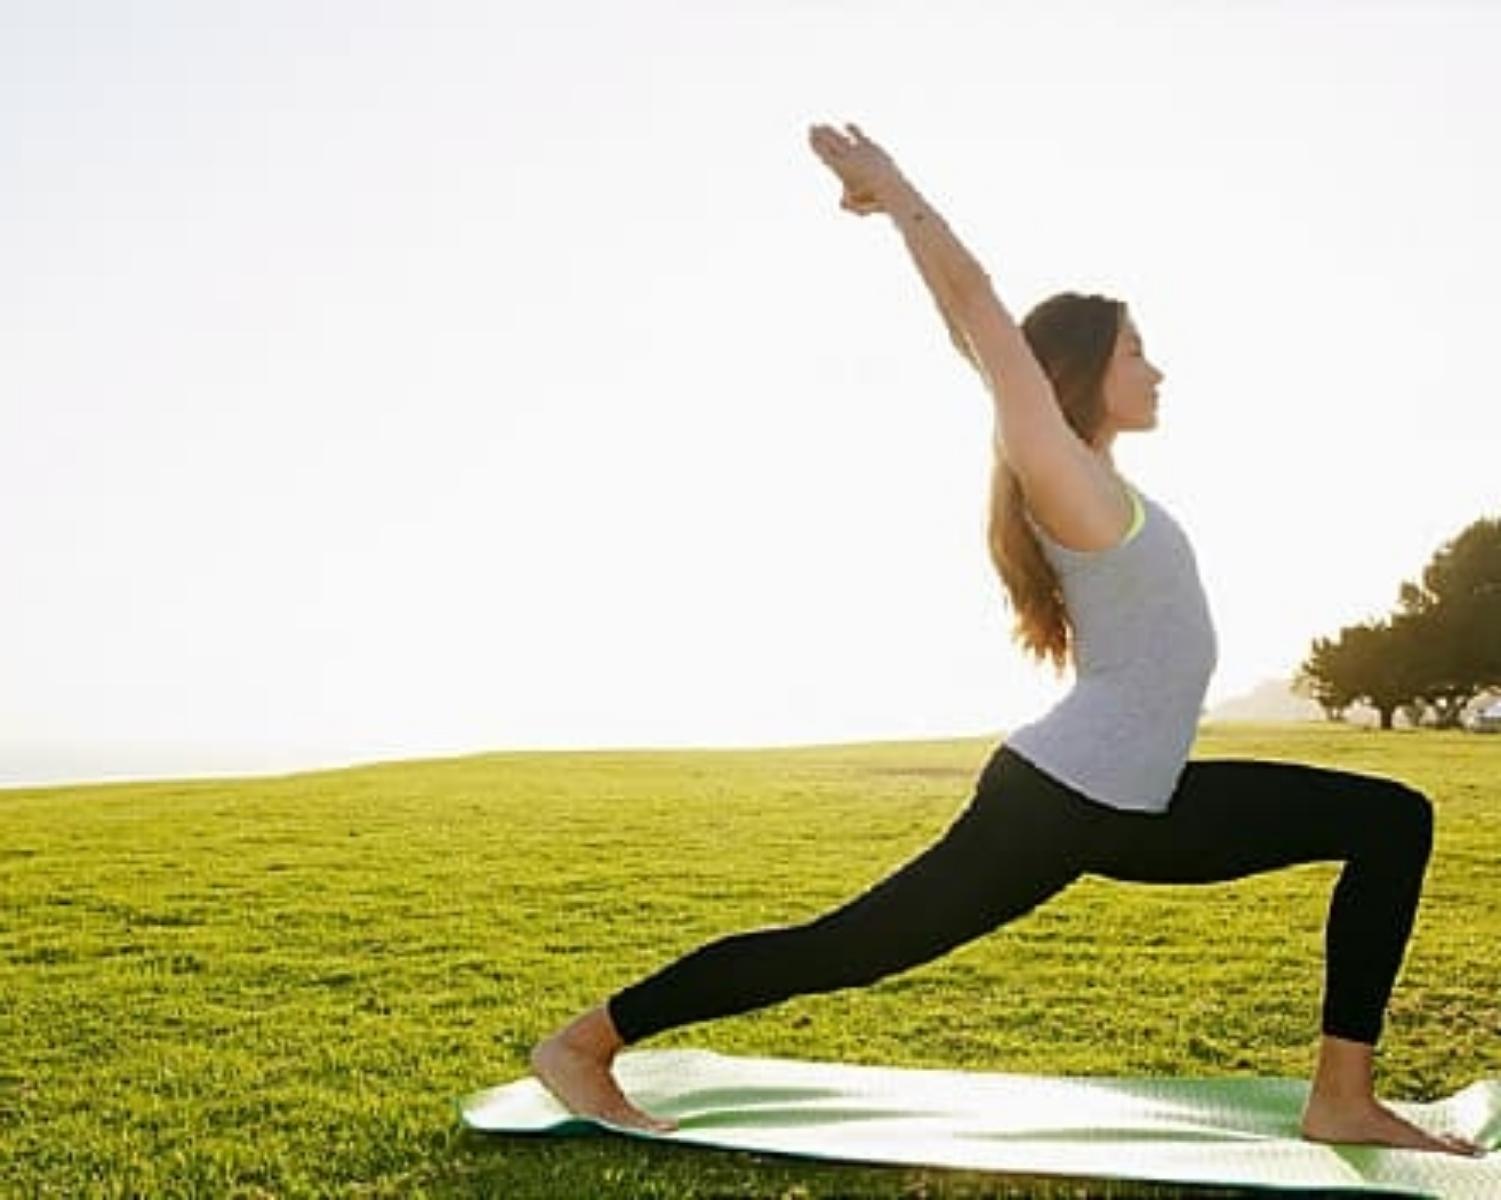 1. Yoga Improves Strength, Balance And Flexibility. 